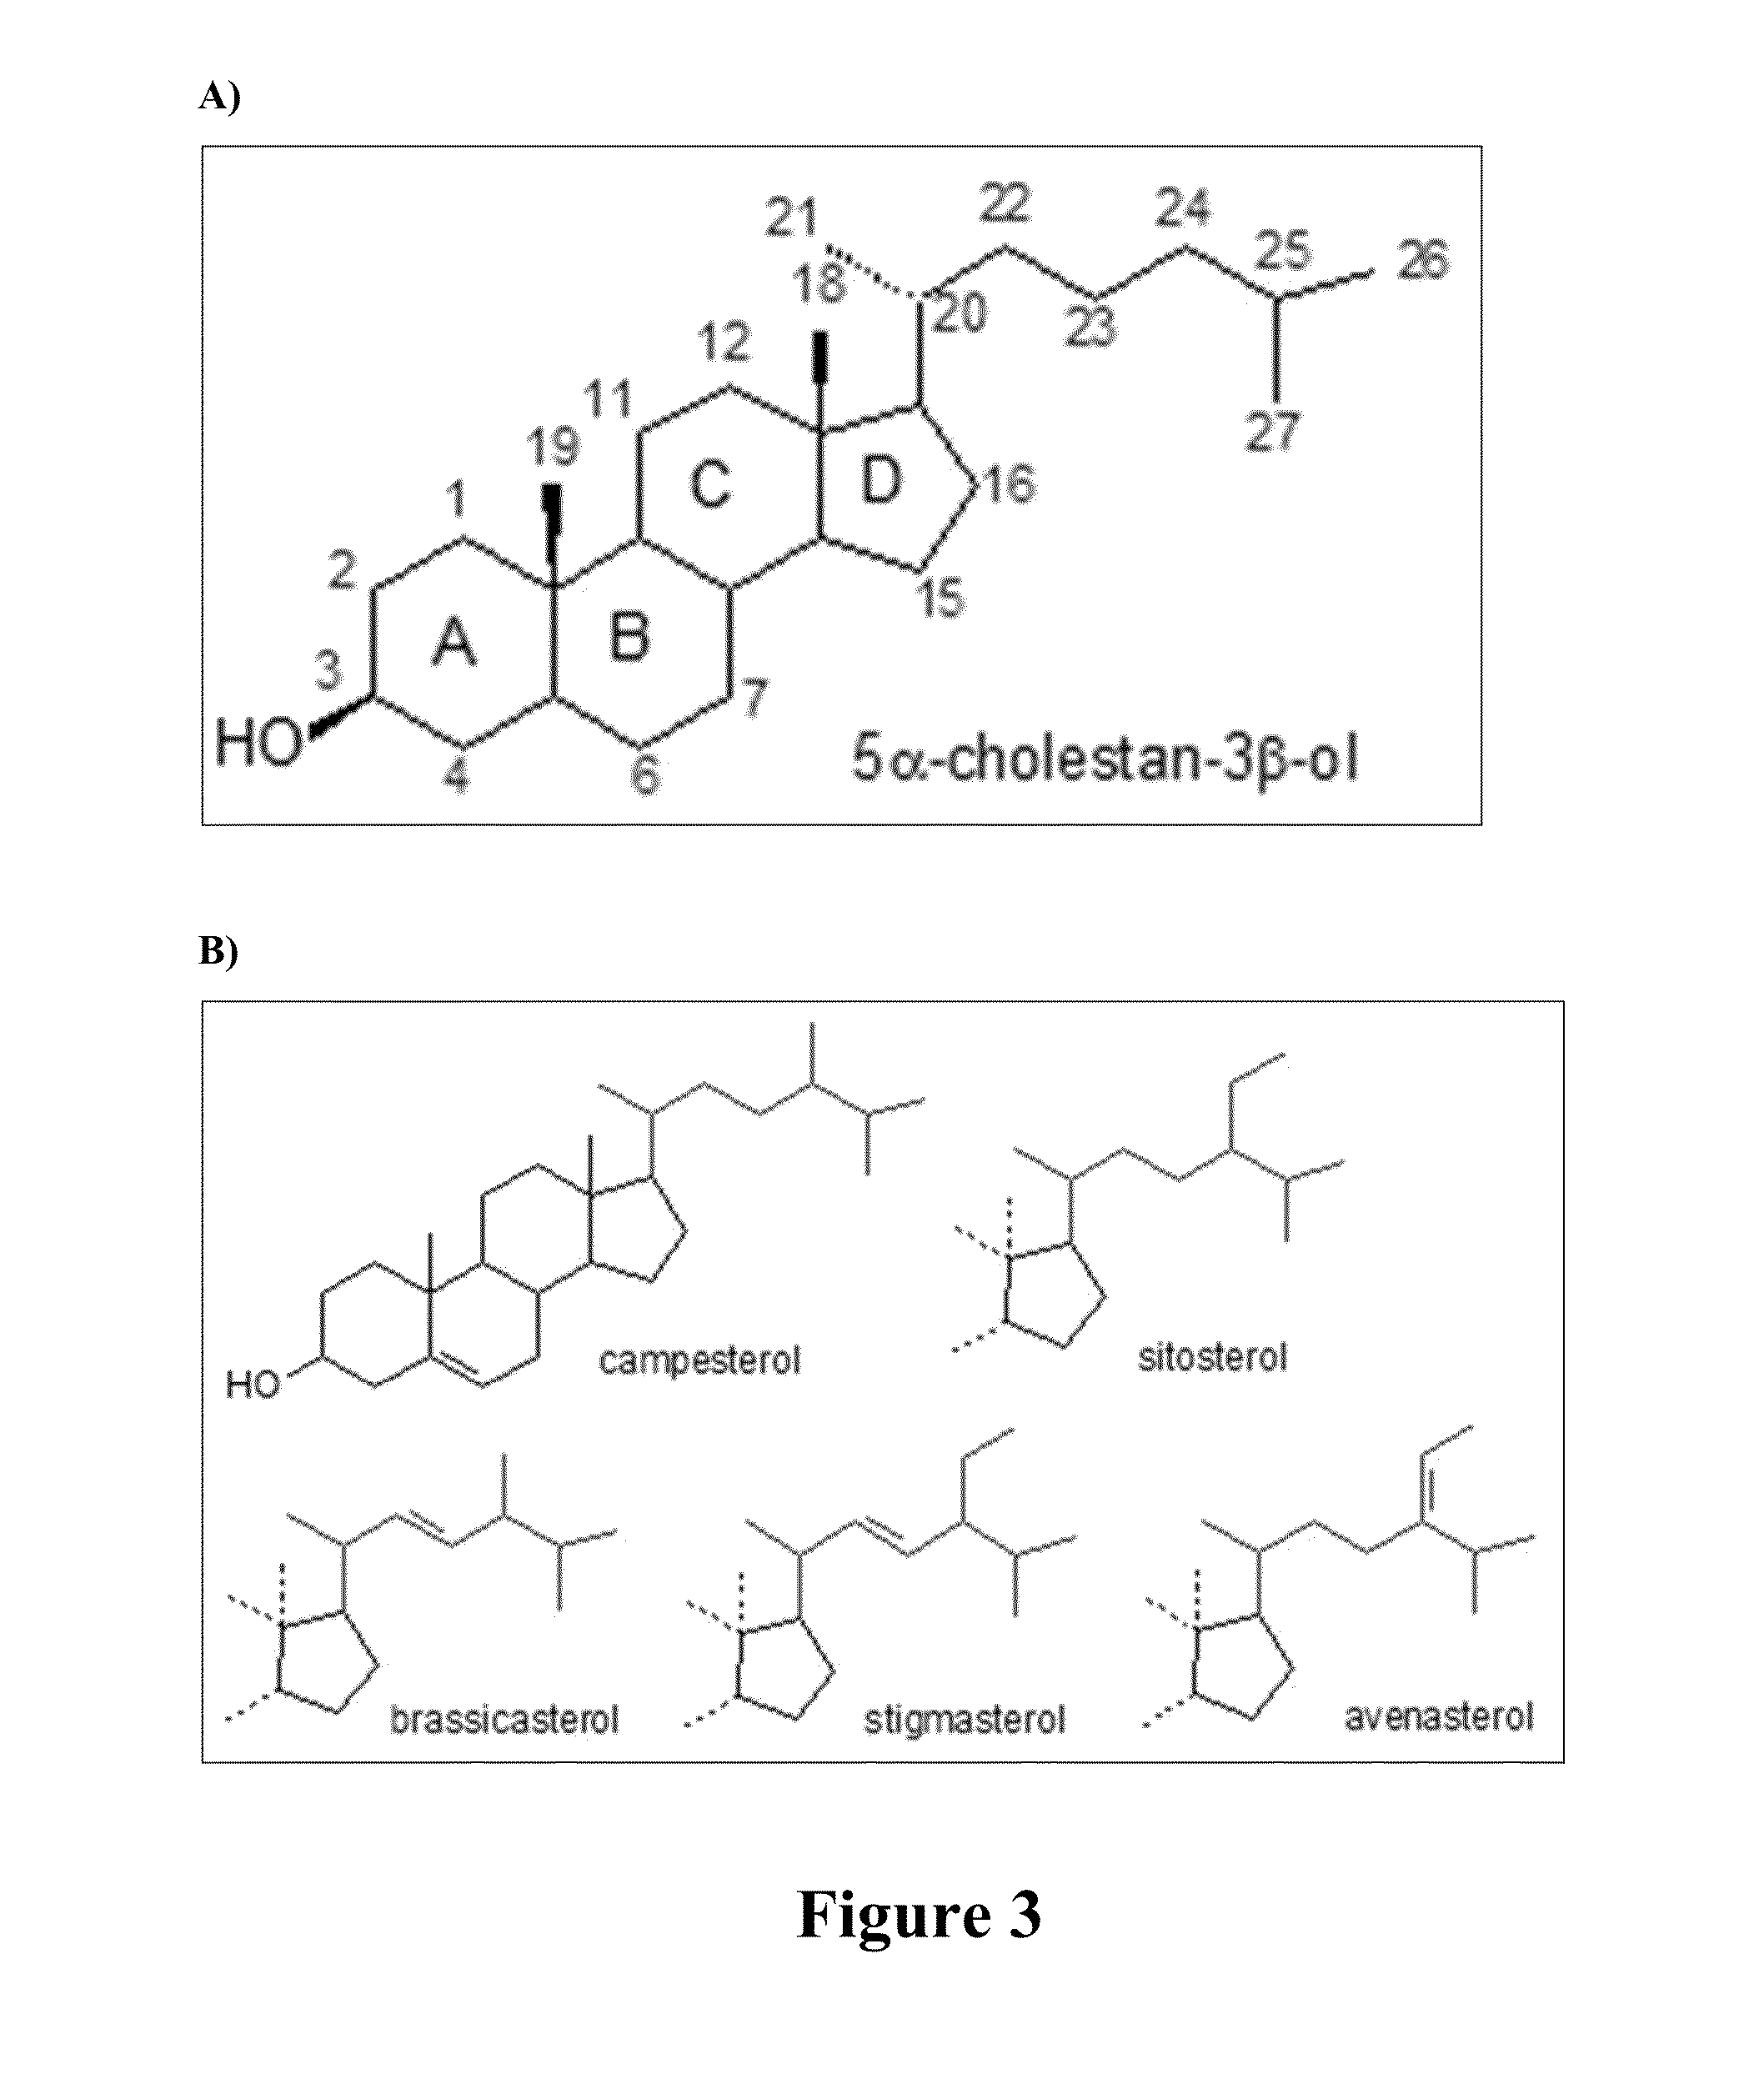 Lipid comprising docosapentaenoic acid